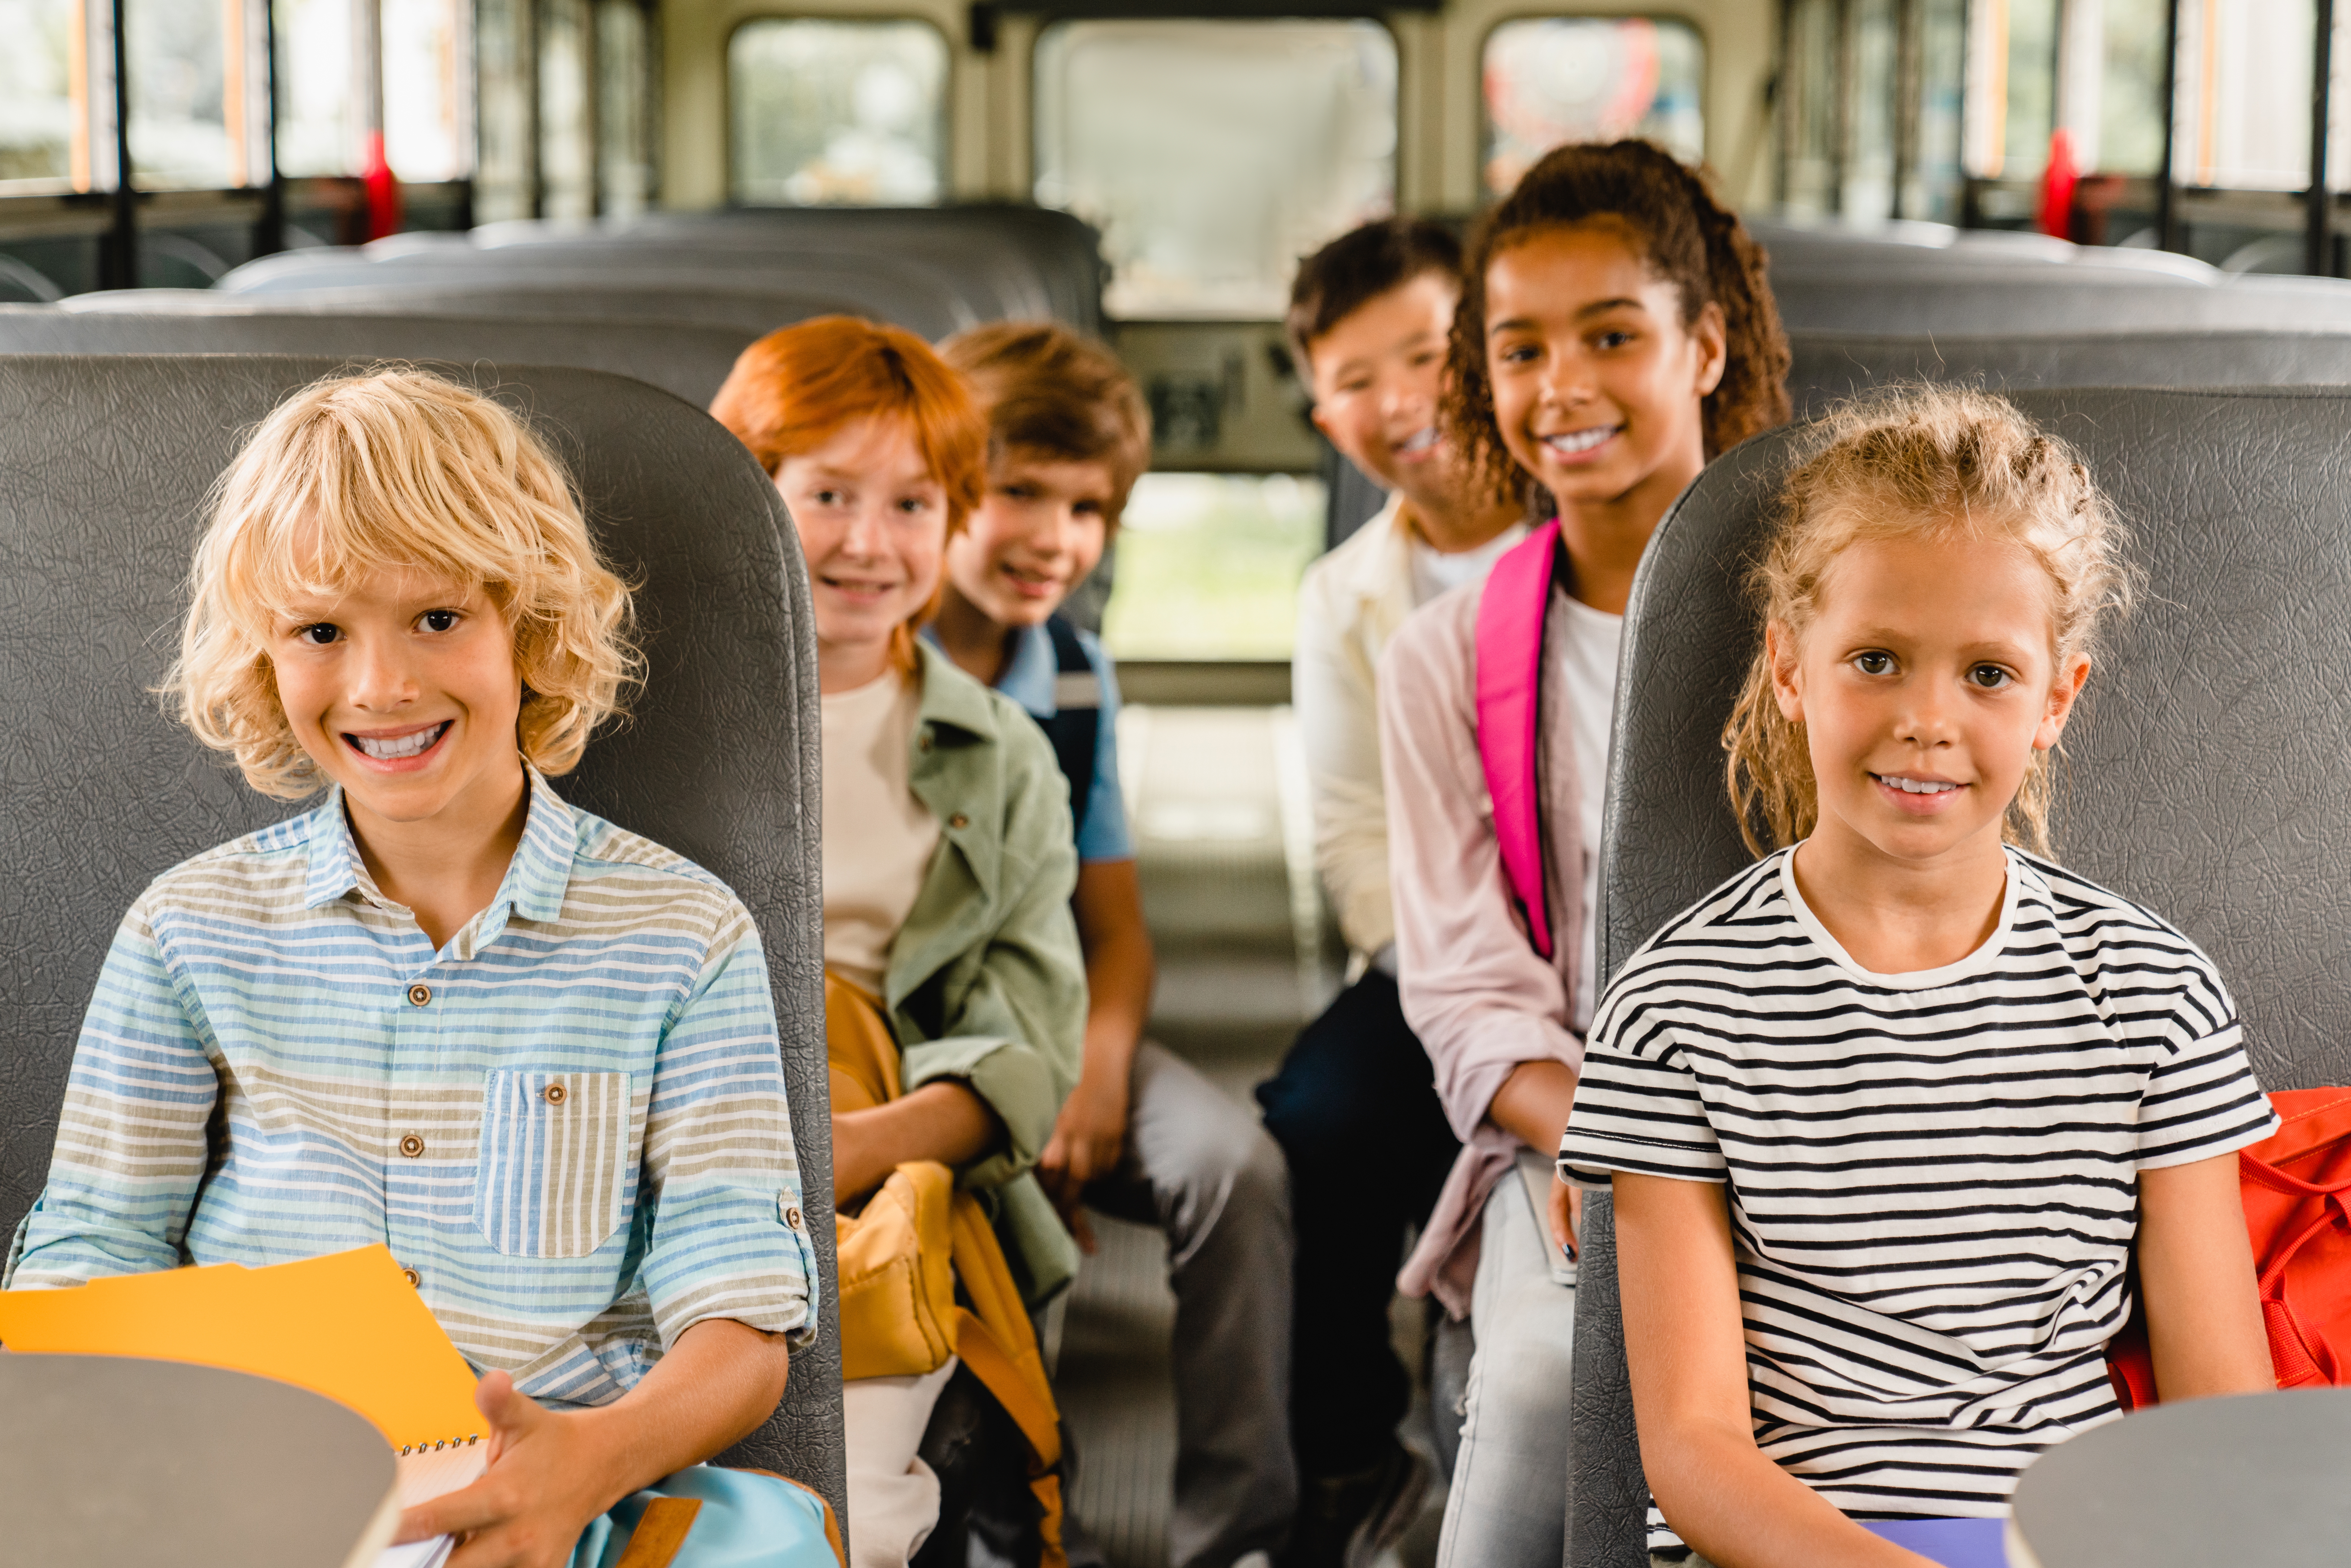 Children sitting inside a school bus | Source: Shutterstock